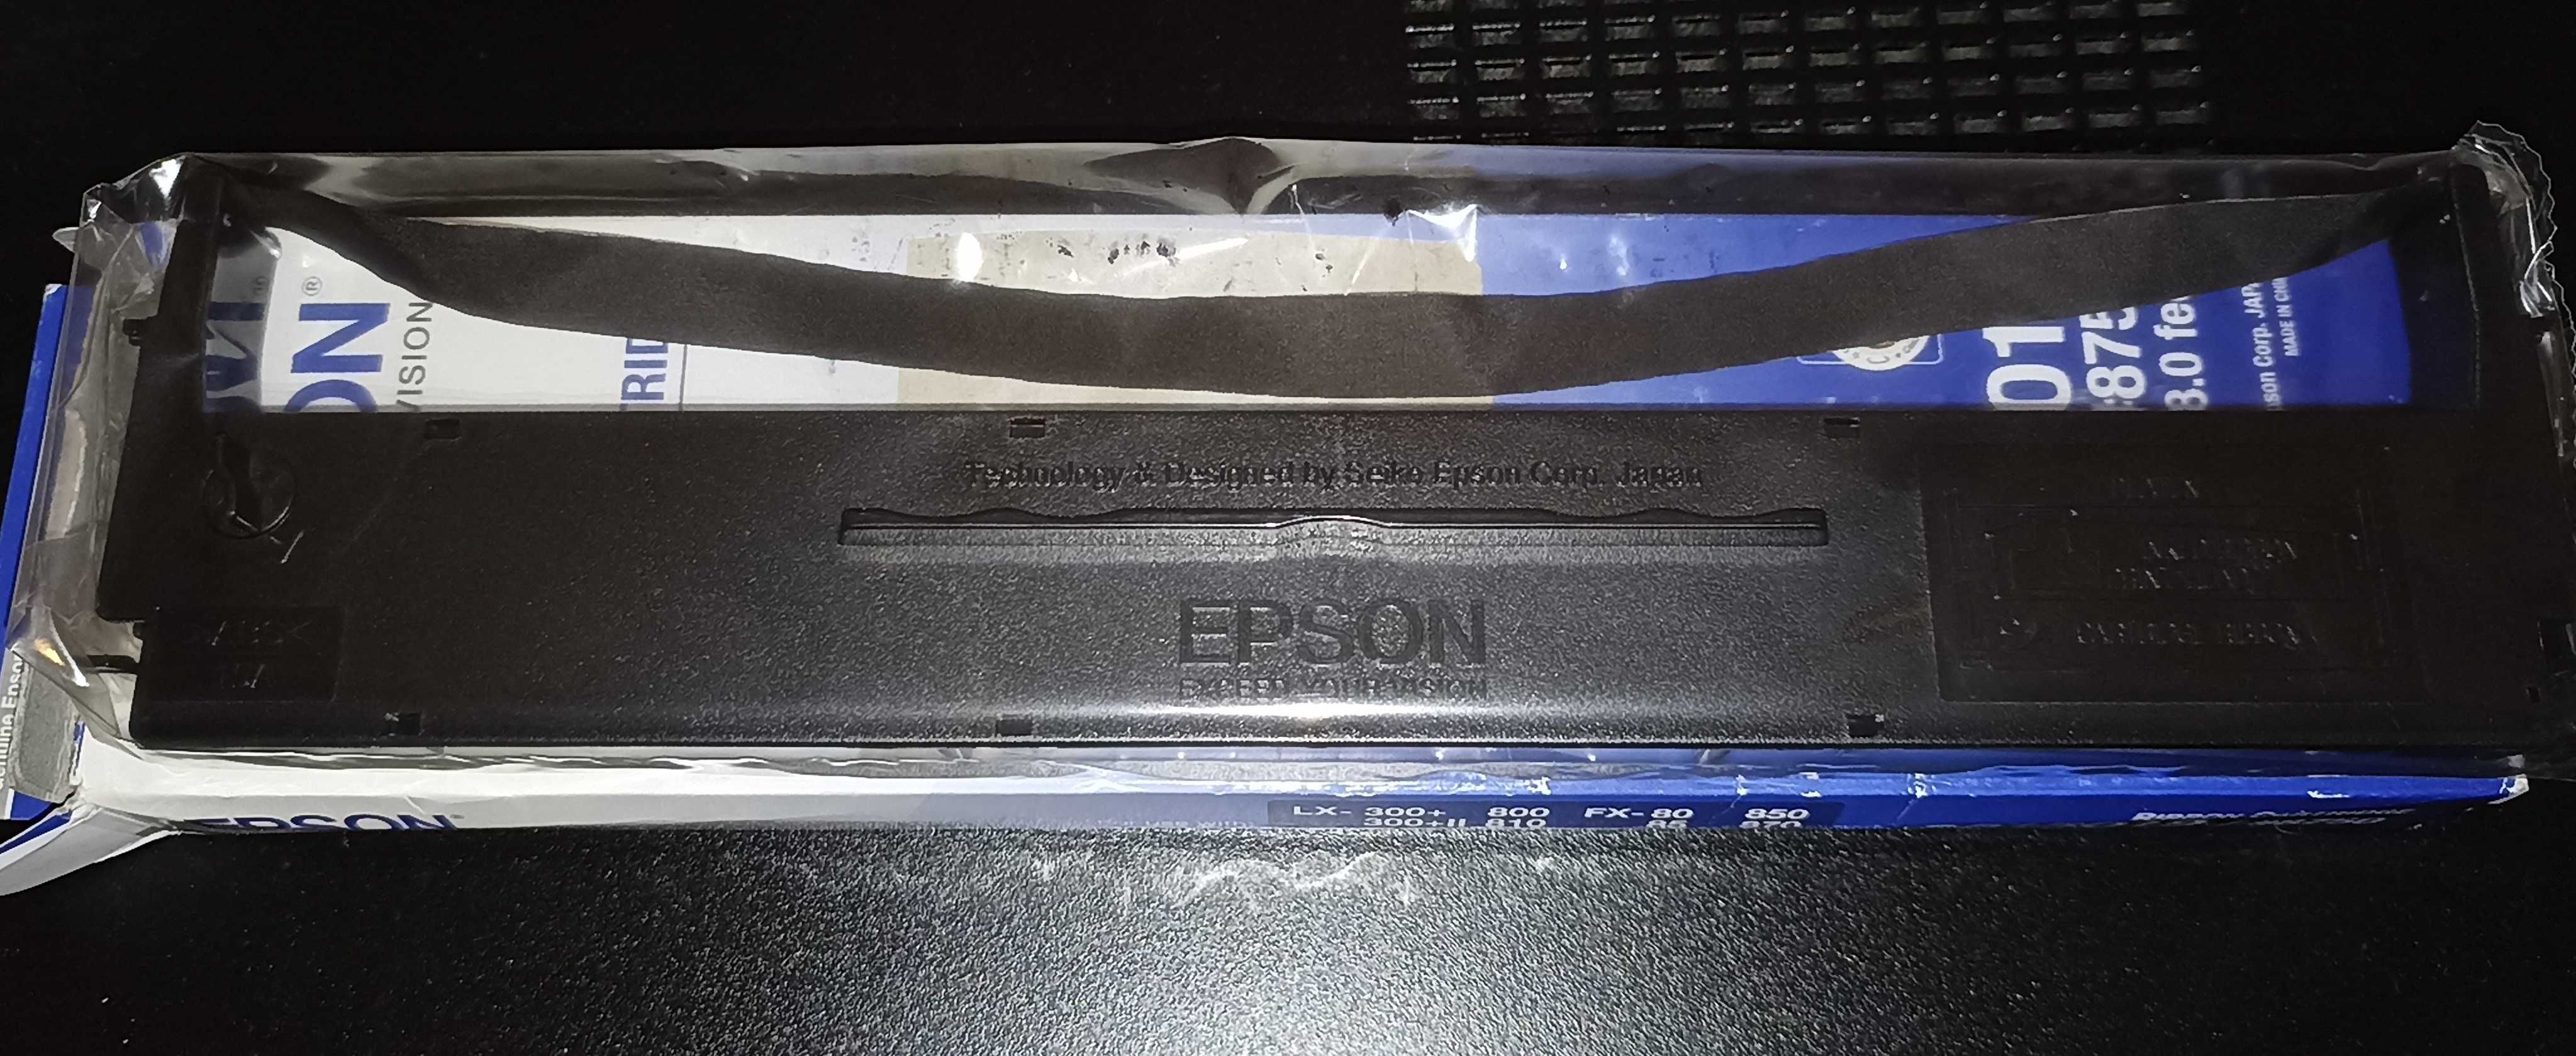 Fita impressora Epson LX-300